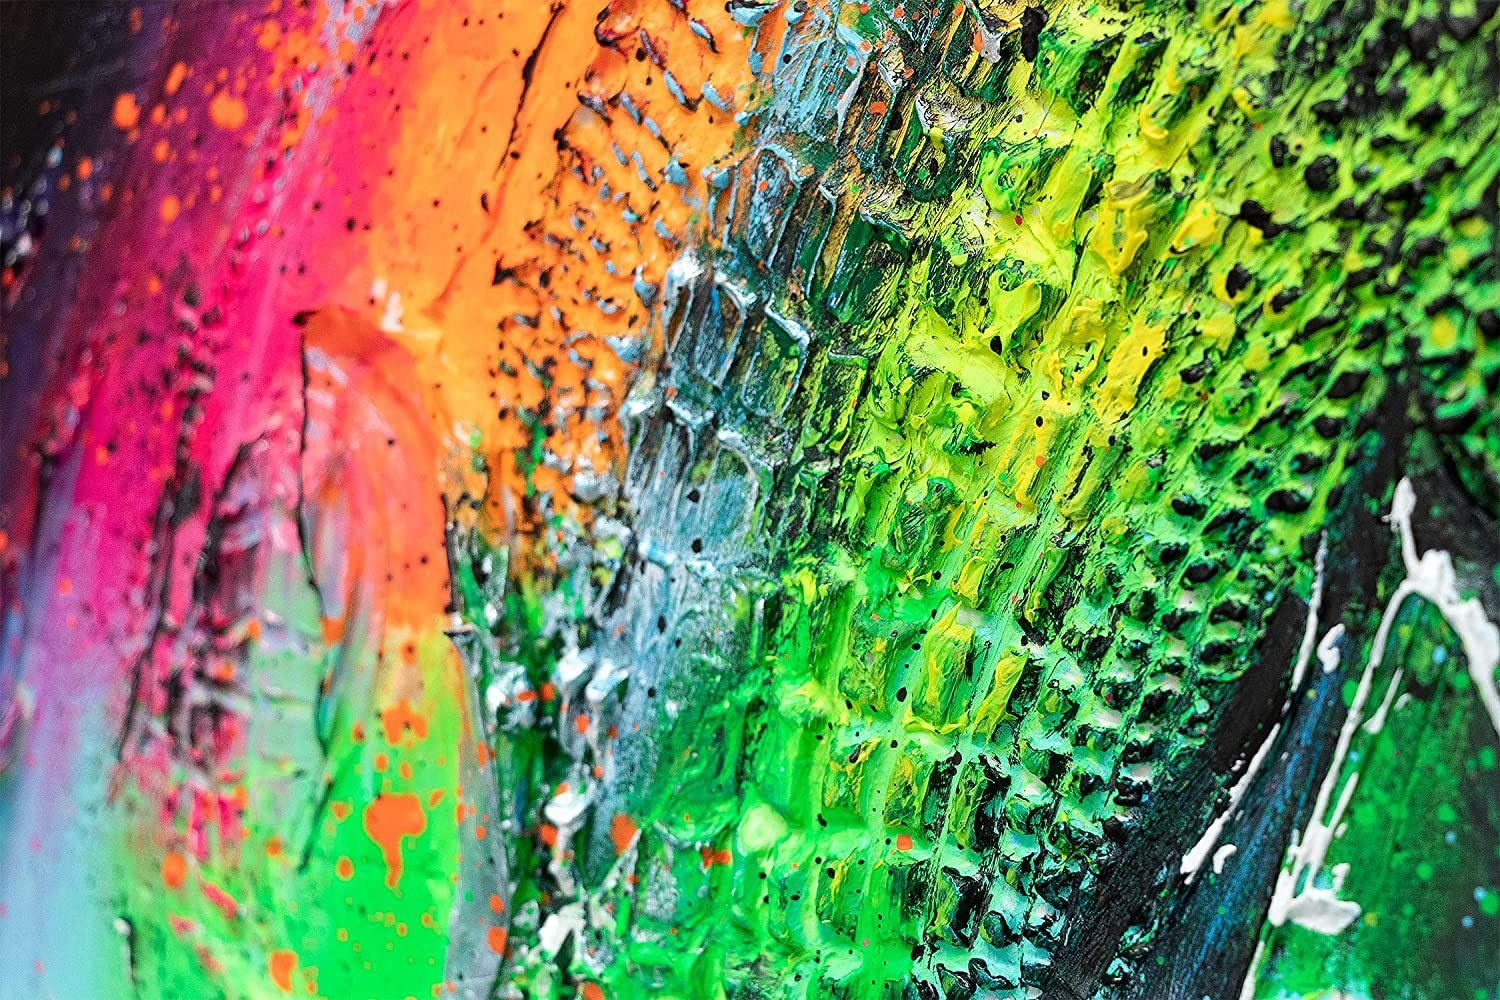 YS-Art Gemälde Abstraktion, Bild Leinwand Vertikales Regenbogen Schwarz Fokus, Bunt Handgemalt